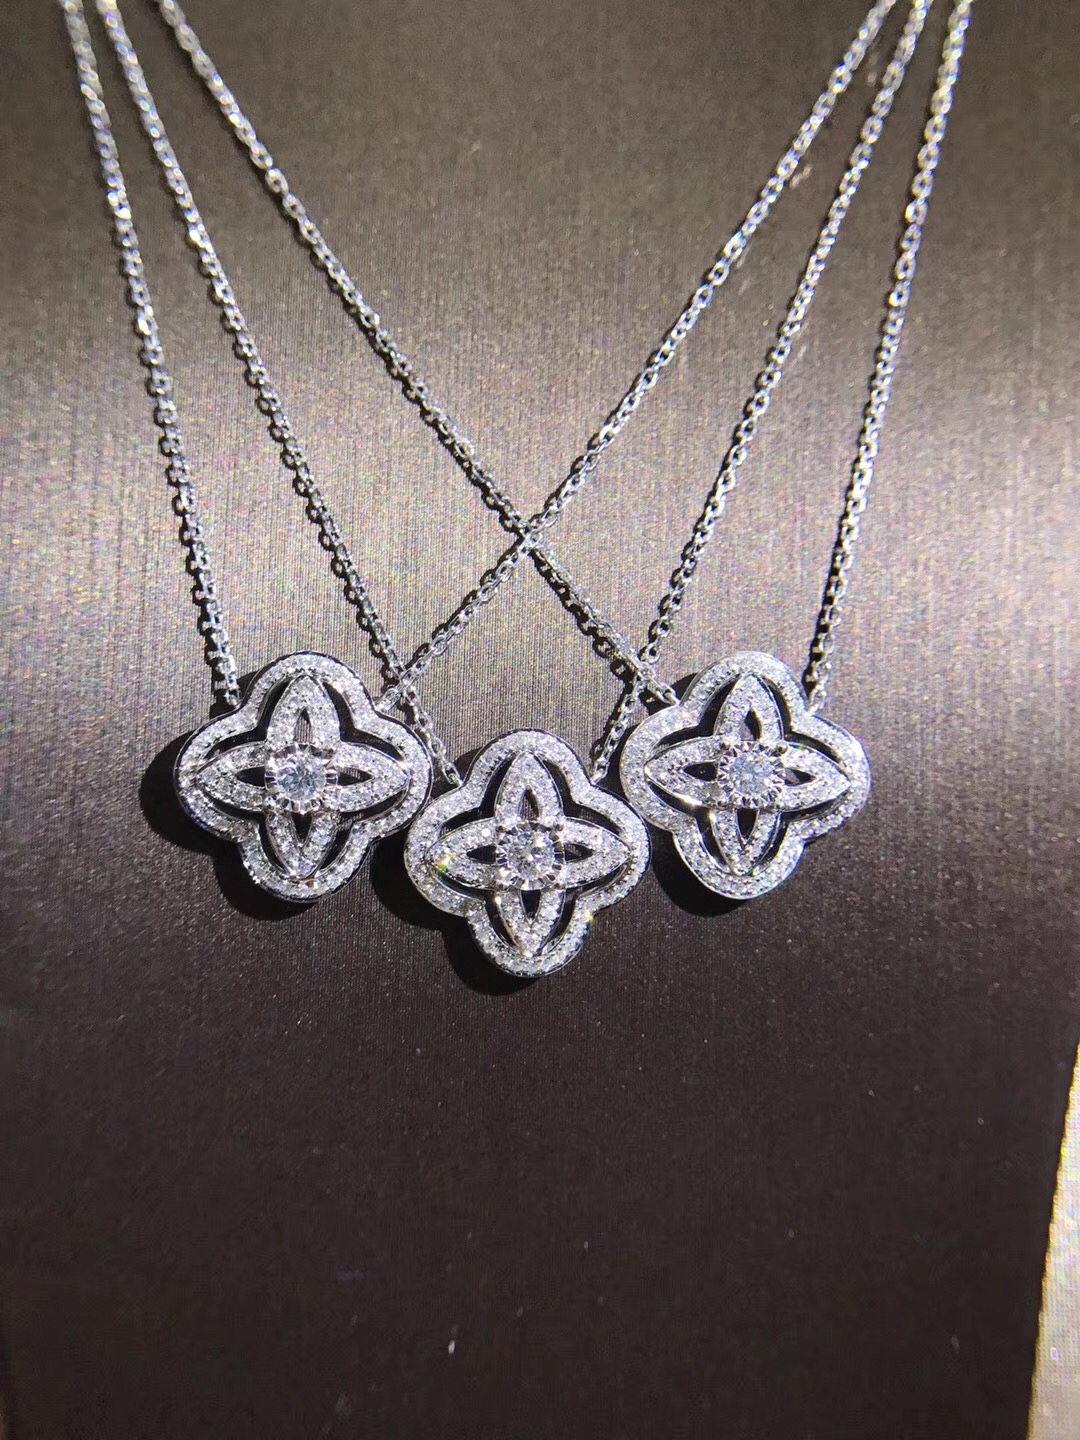 N00375 Flower Shaped Diamond Necklace in 18k White Gold/18k Gold